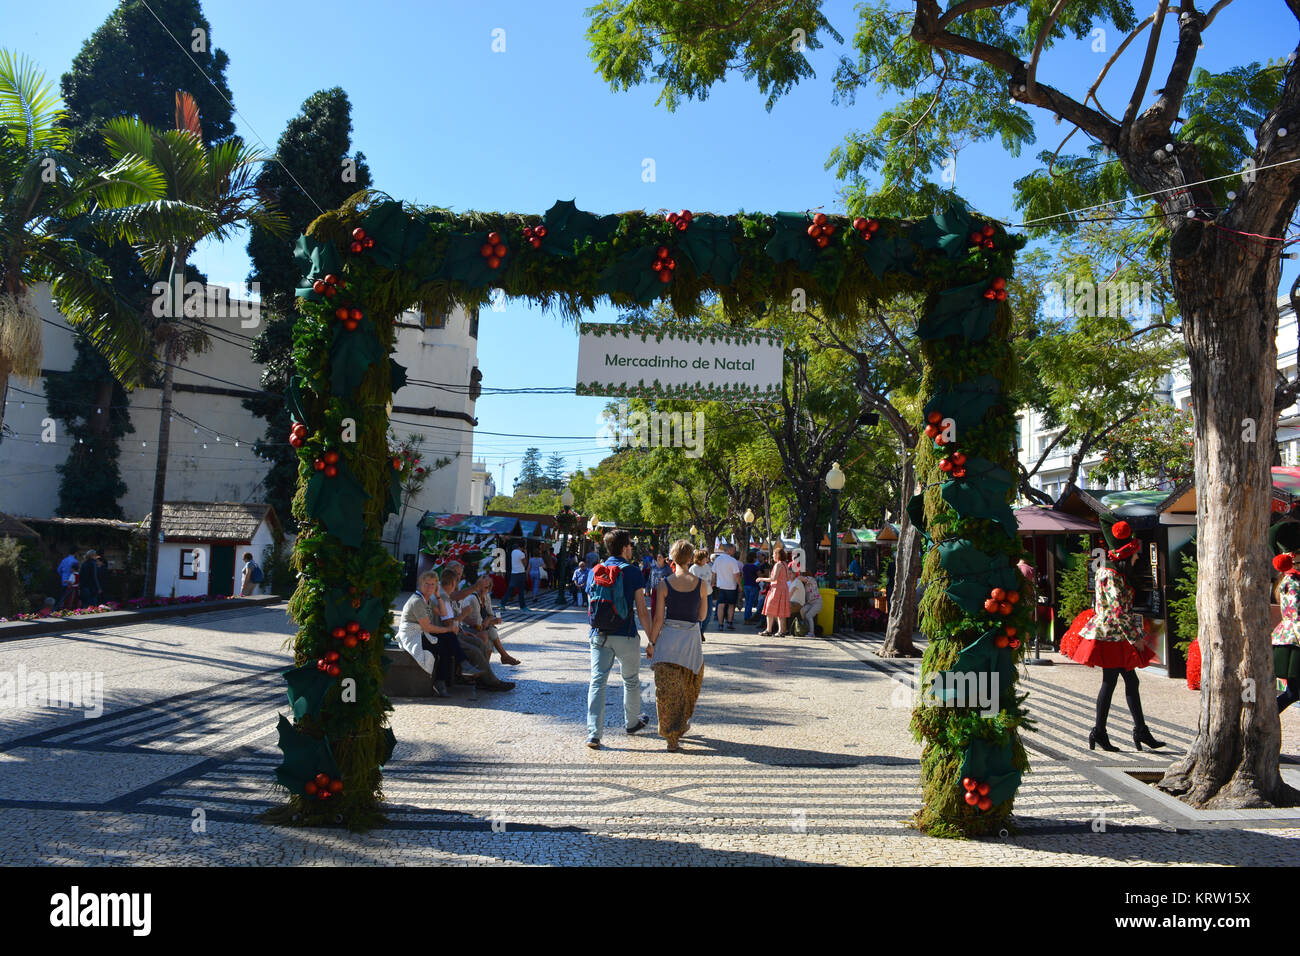 Mercadinho de Natal, the Christmas Market on the esplanade of Avenida Arriaga, Funchal, Madeira, Portugal Stock Photo